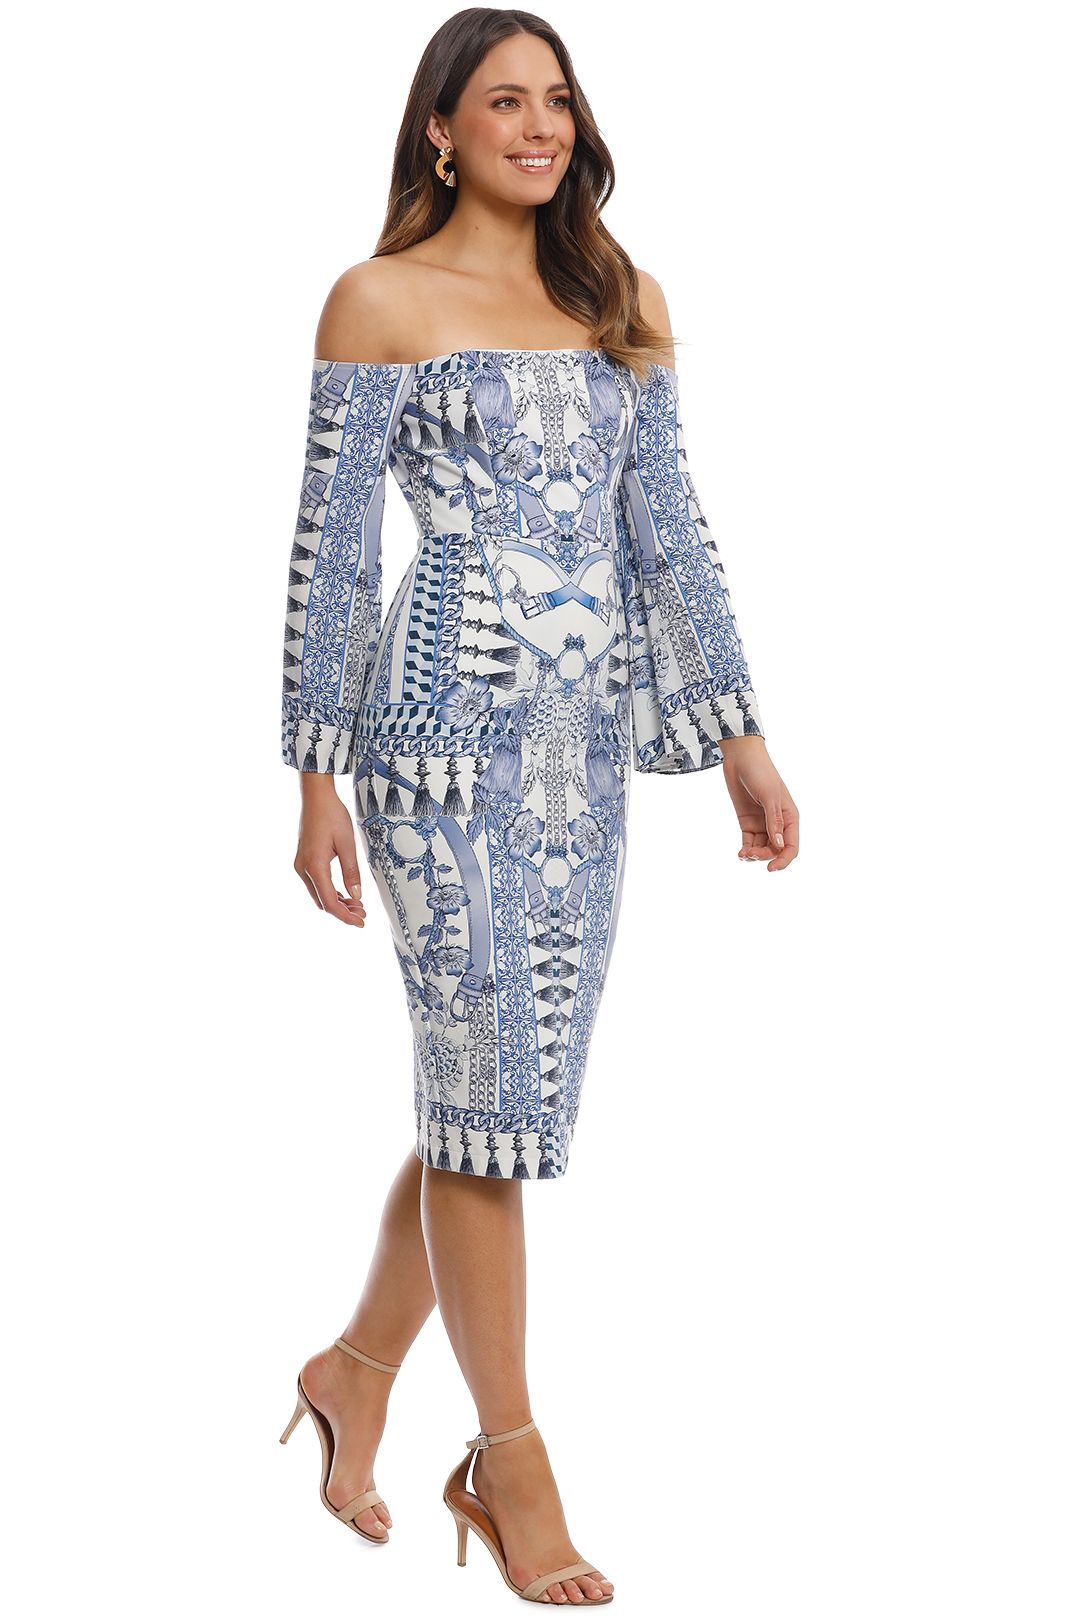 Thurley - Wedgewood Print Bonded Dress - Blue - Side